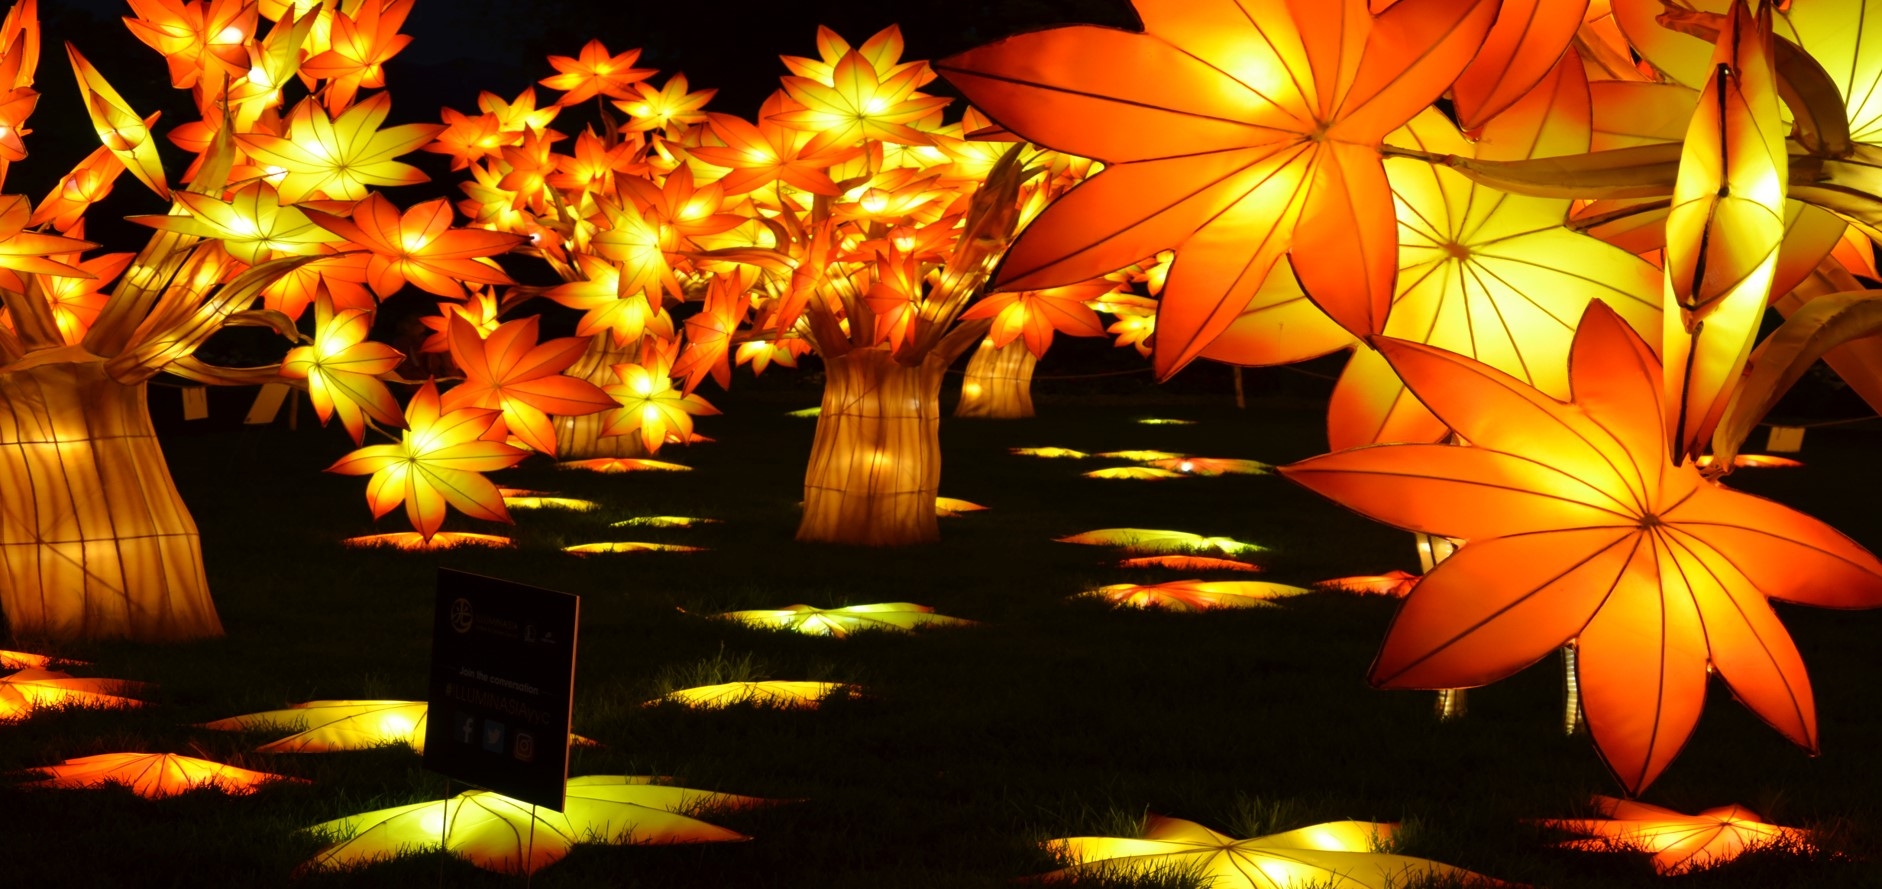 maple tree lanterns